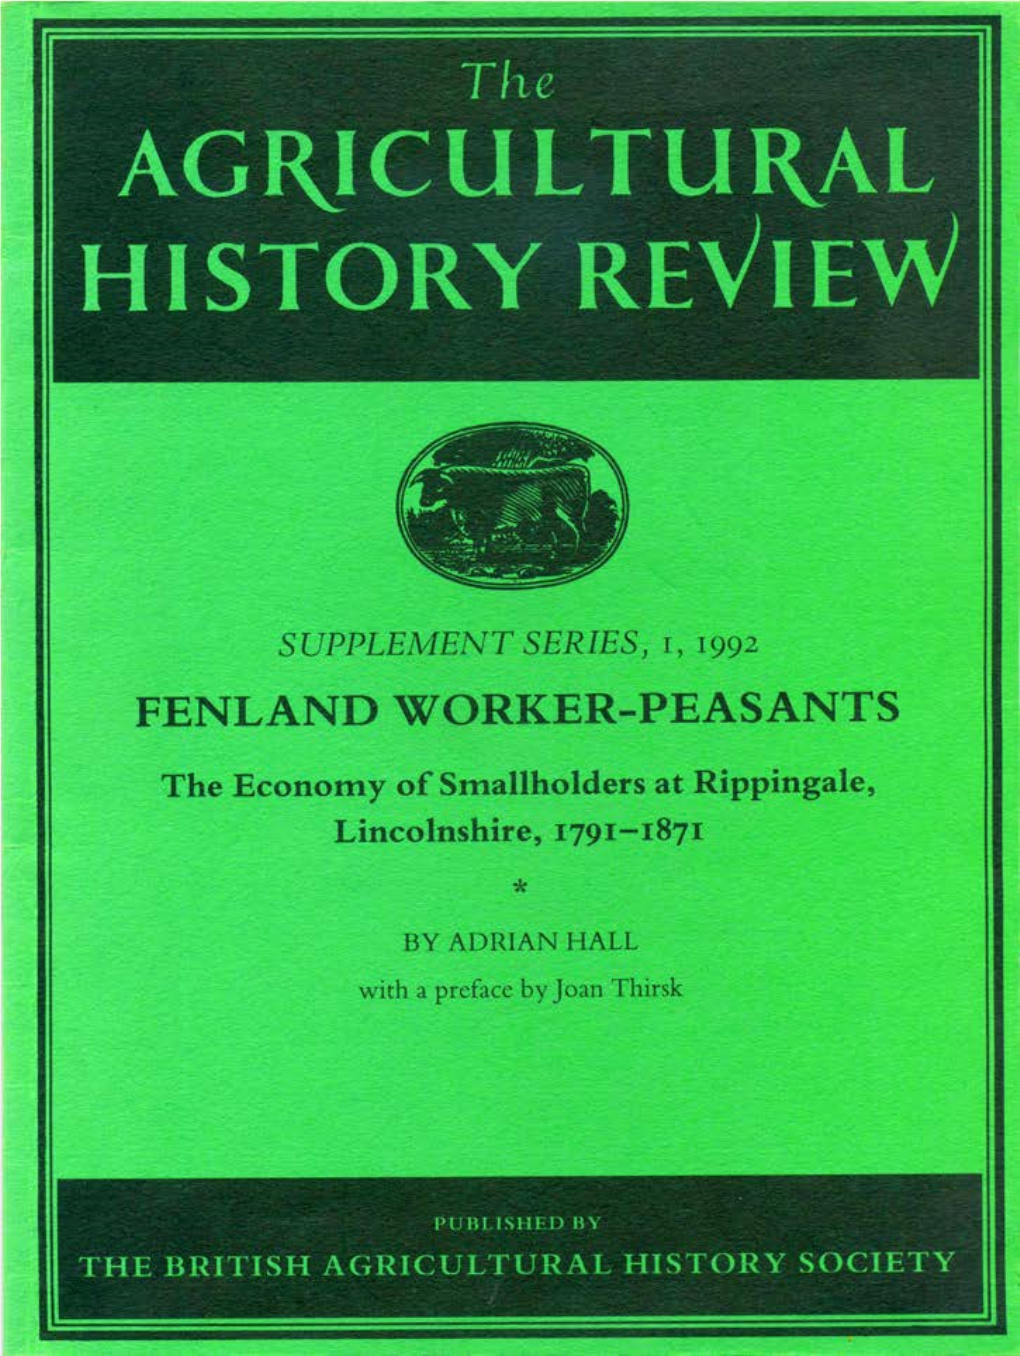 Hall Fenland Worker-Peasants.Pdf